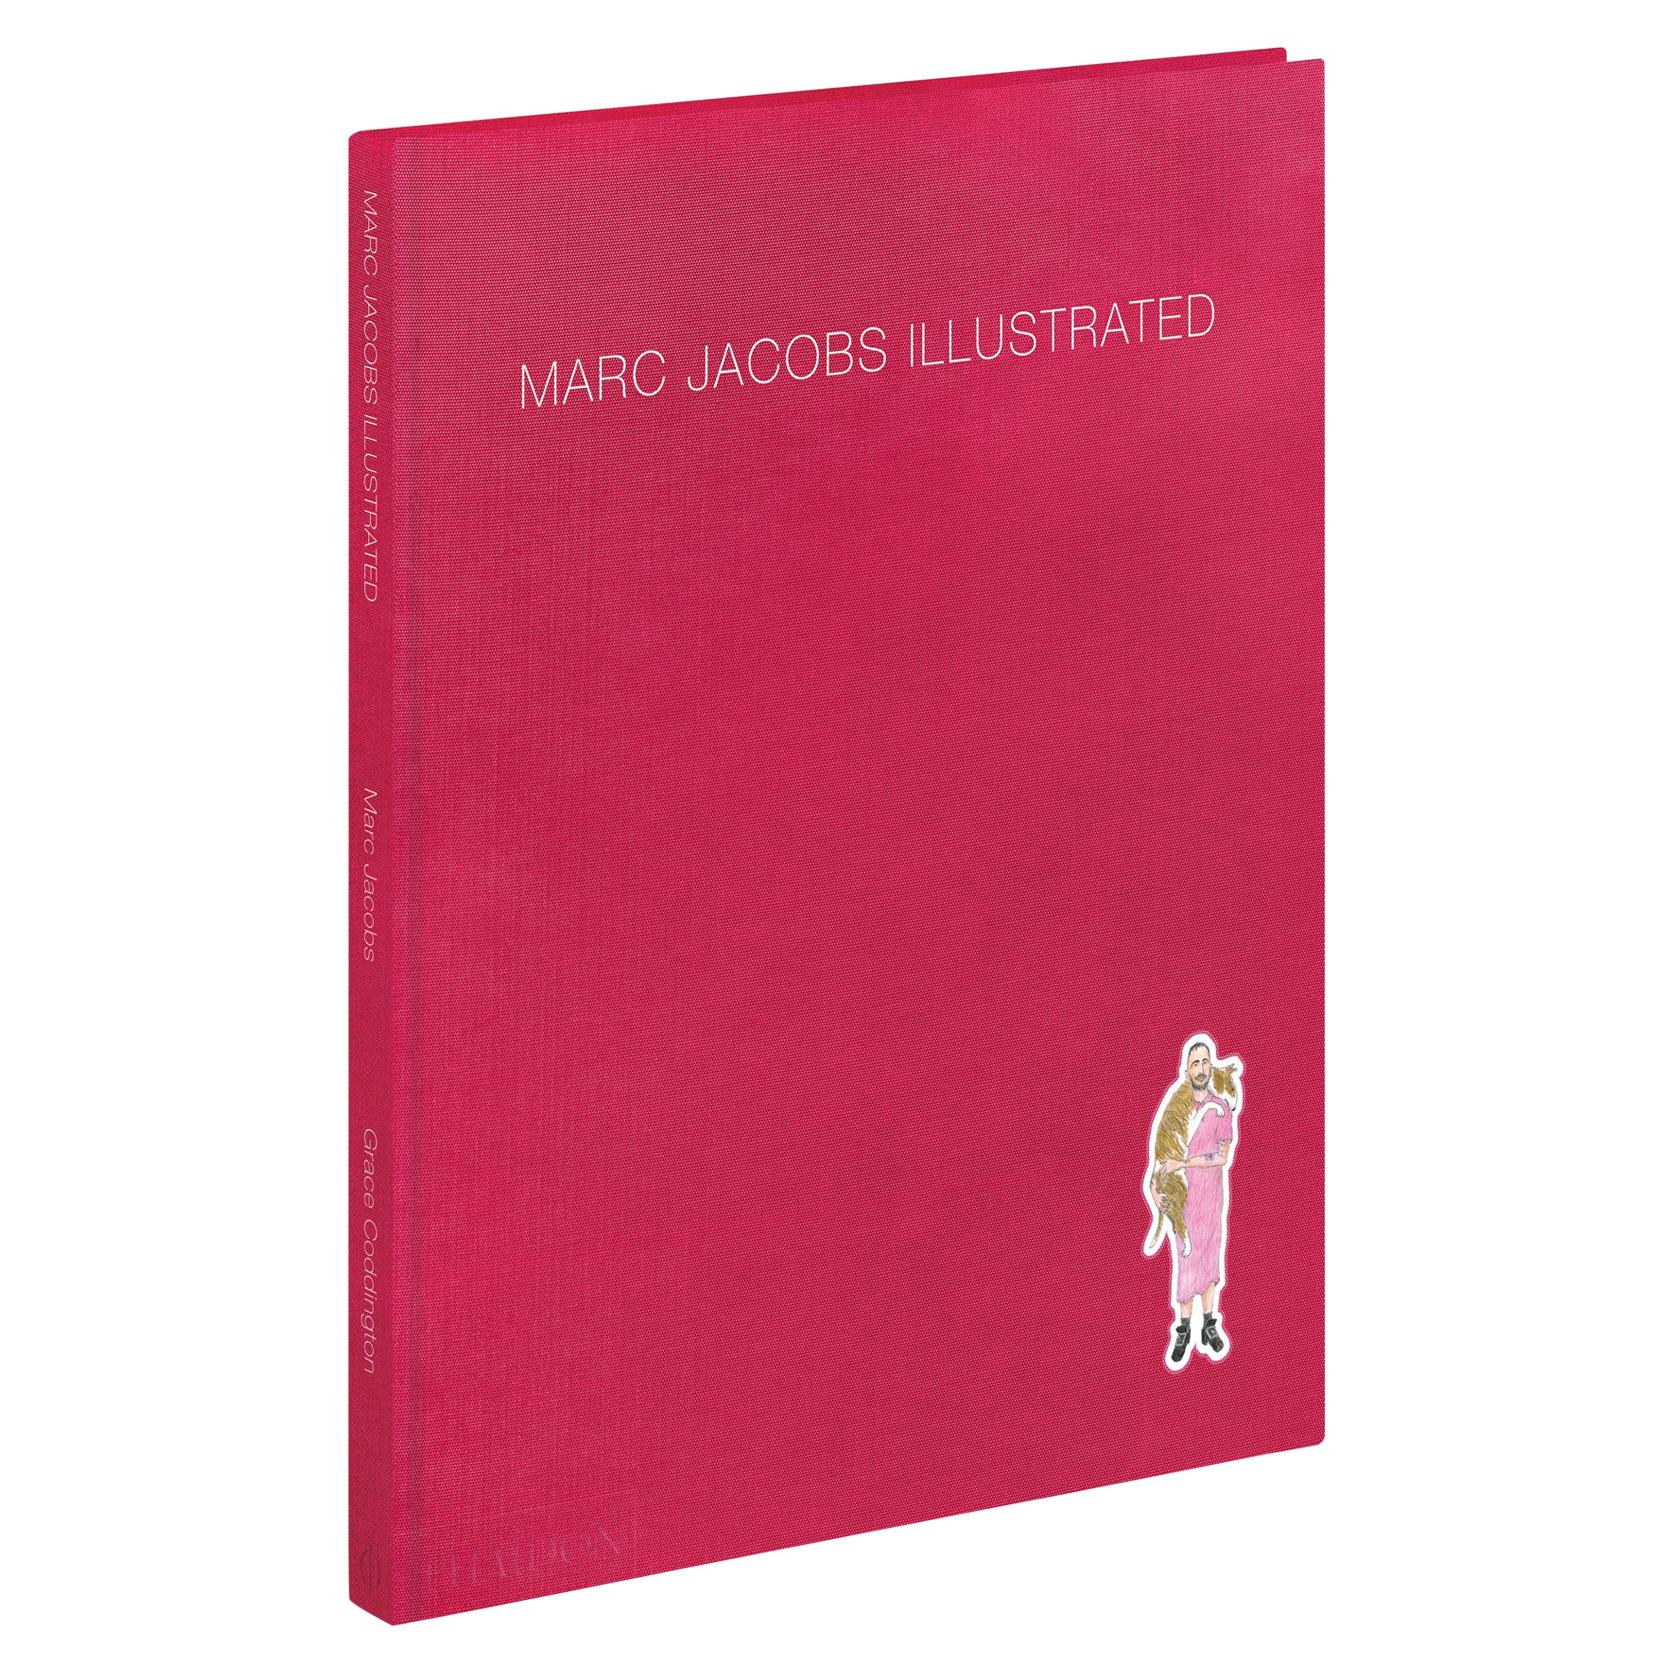 Marc Jacobs Illustrated by Grace Coddington